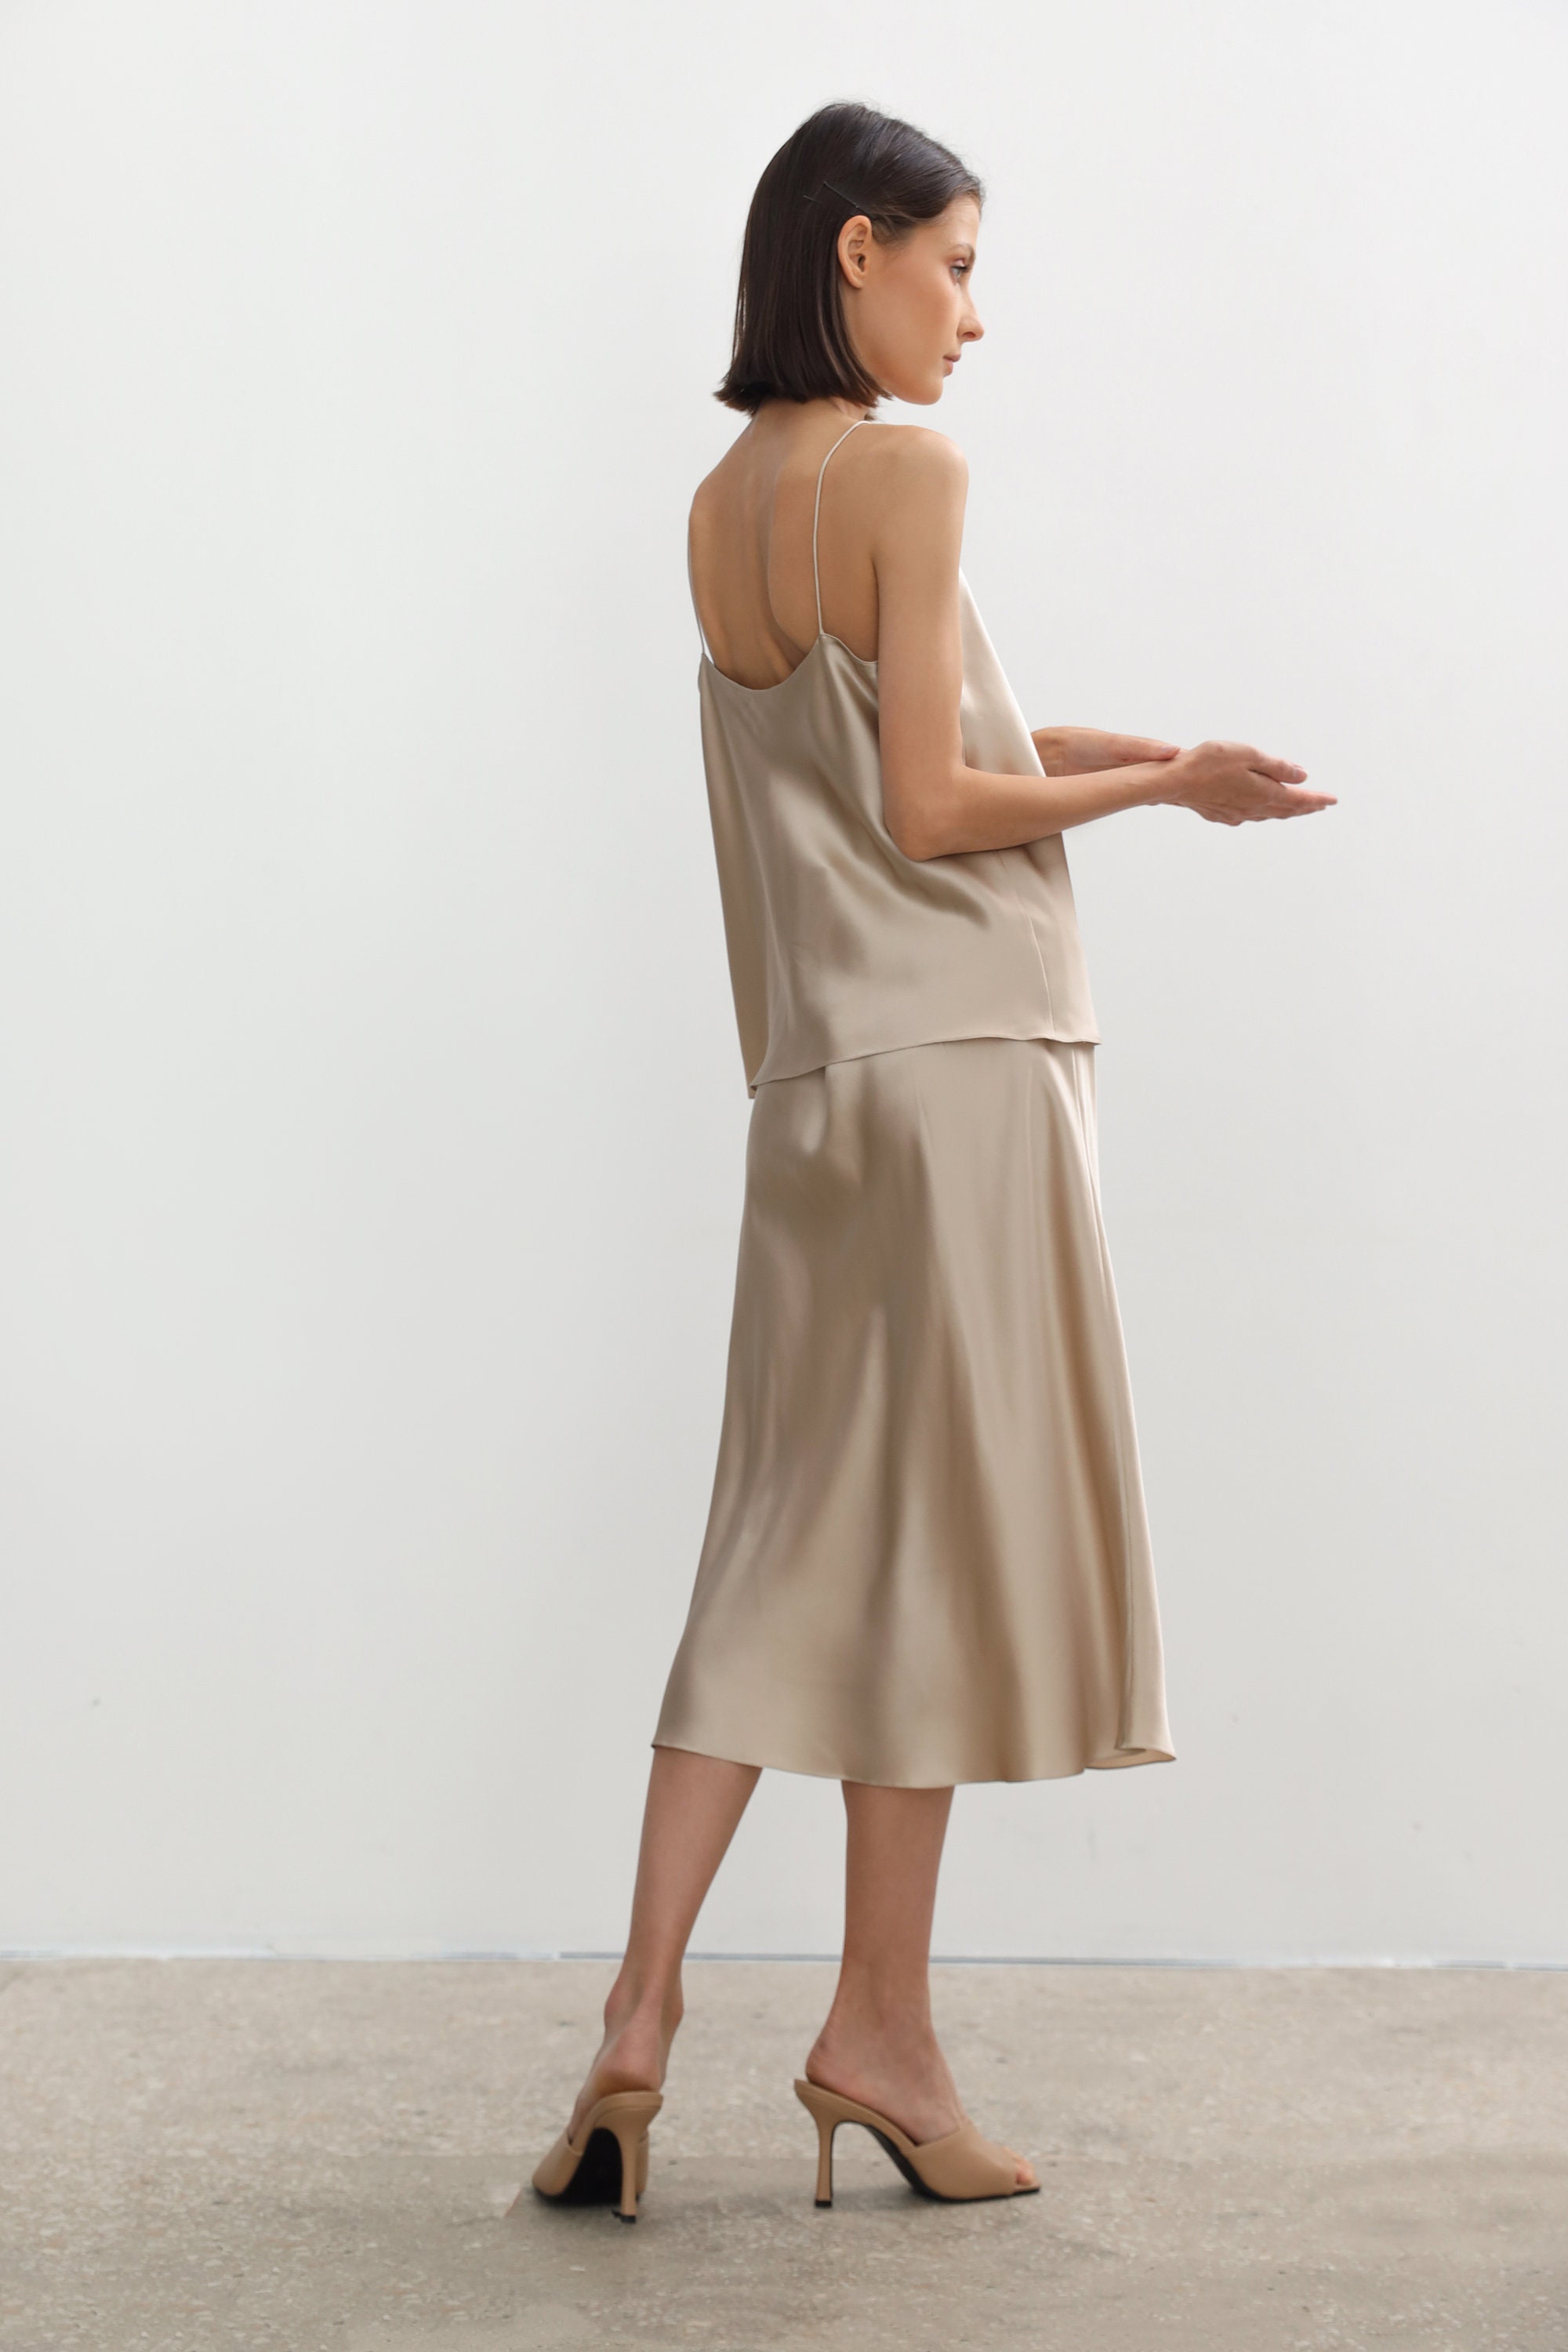 Oyster silk satin skirt bias cut Beige silk slip skirt midi | Etsy